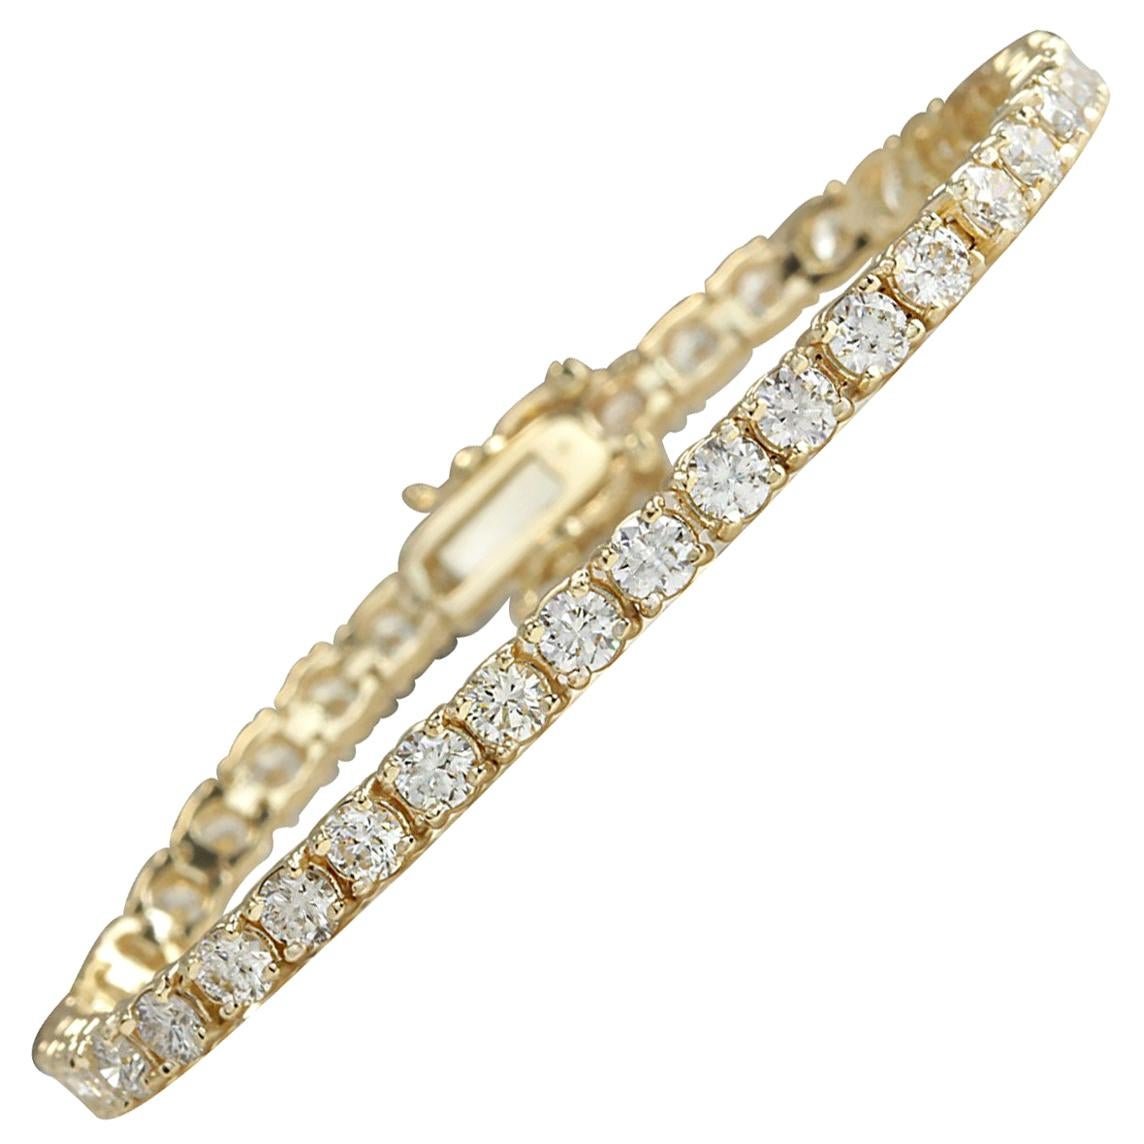 6.60 Carat Diamond Bracelet In 14 Karat Yellow Gold 